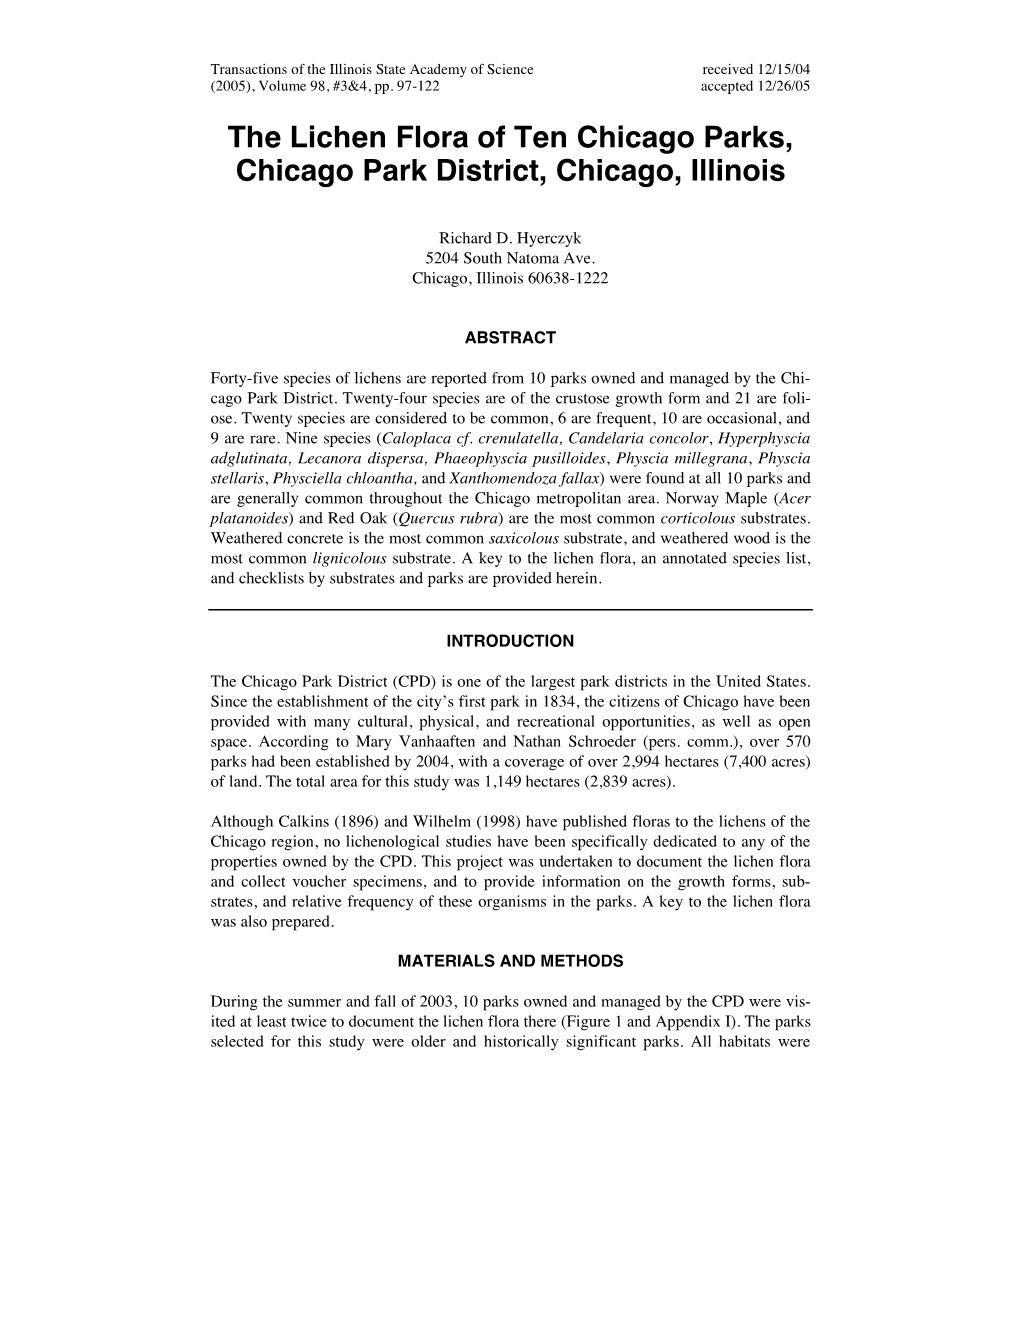 The Lichen Flora of Ten Chicago Parks, Chicago Park District, Chicago, Illinois